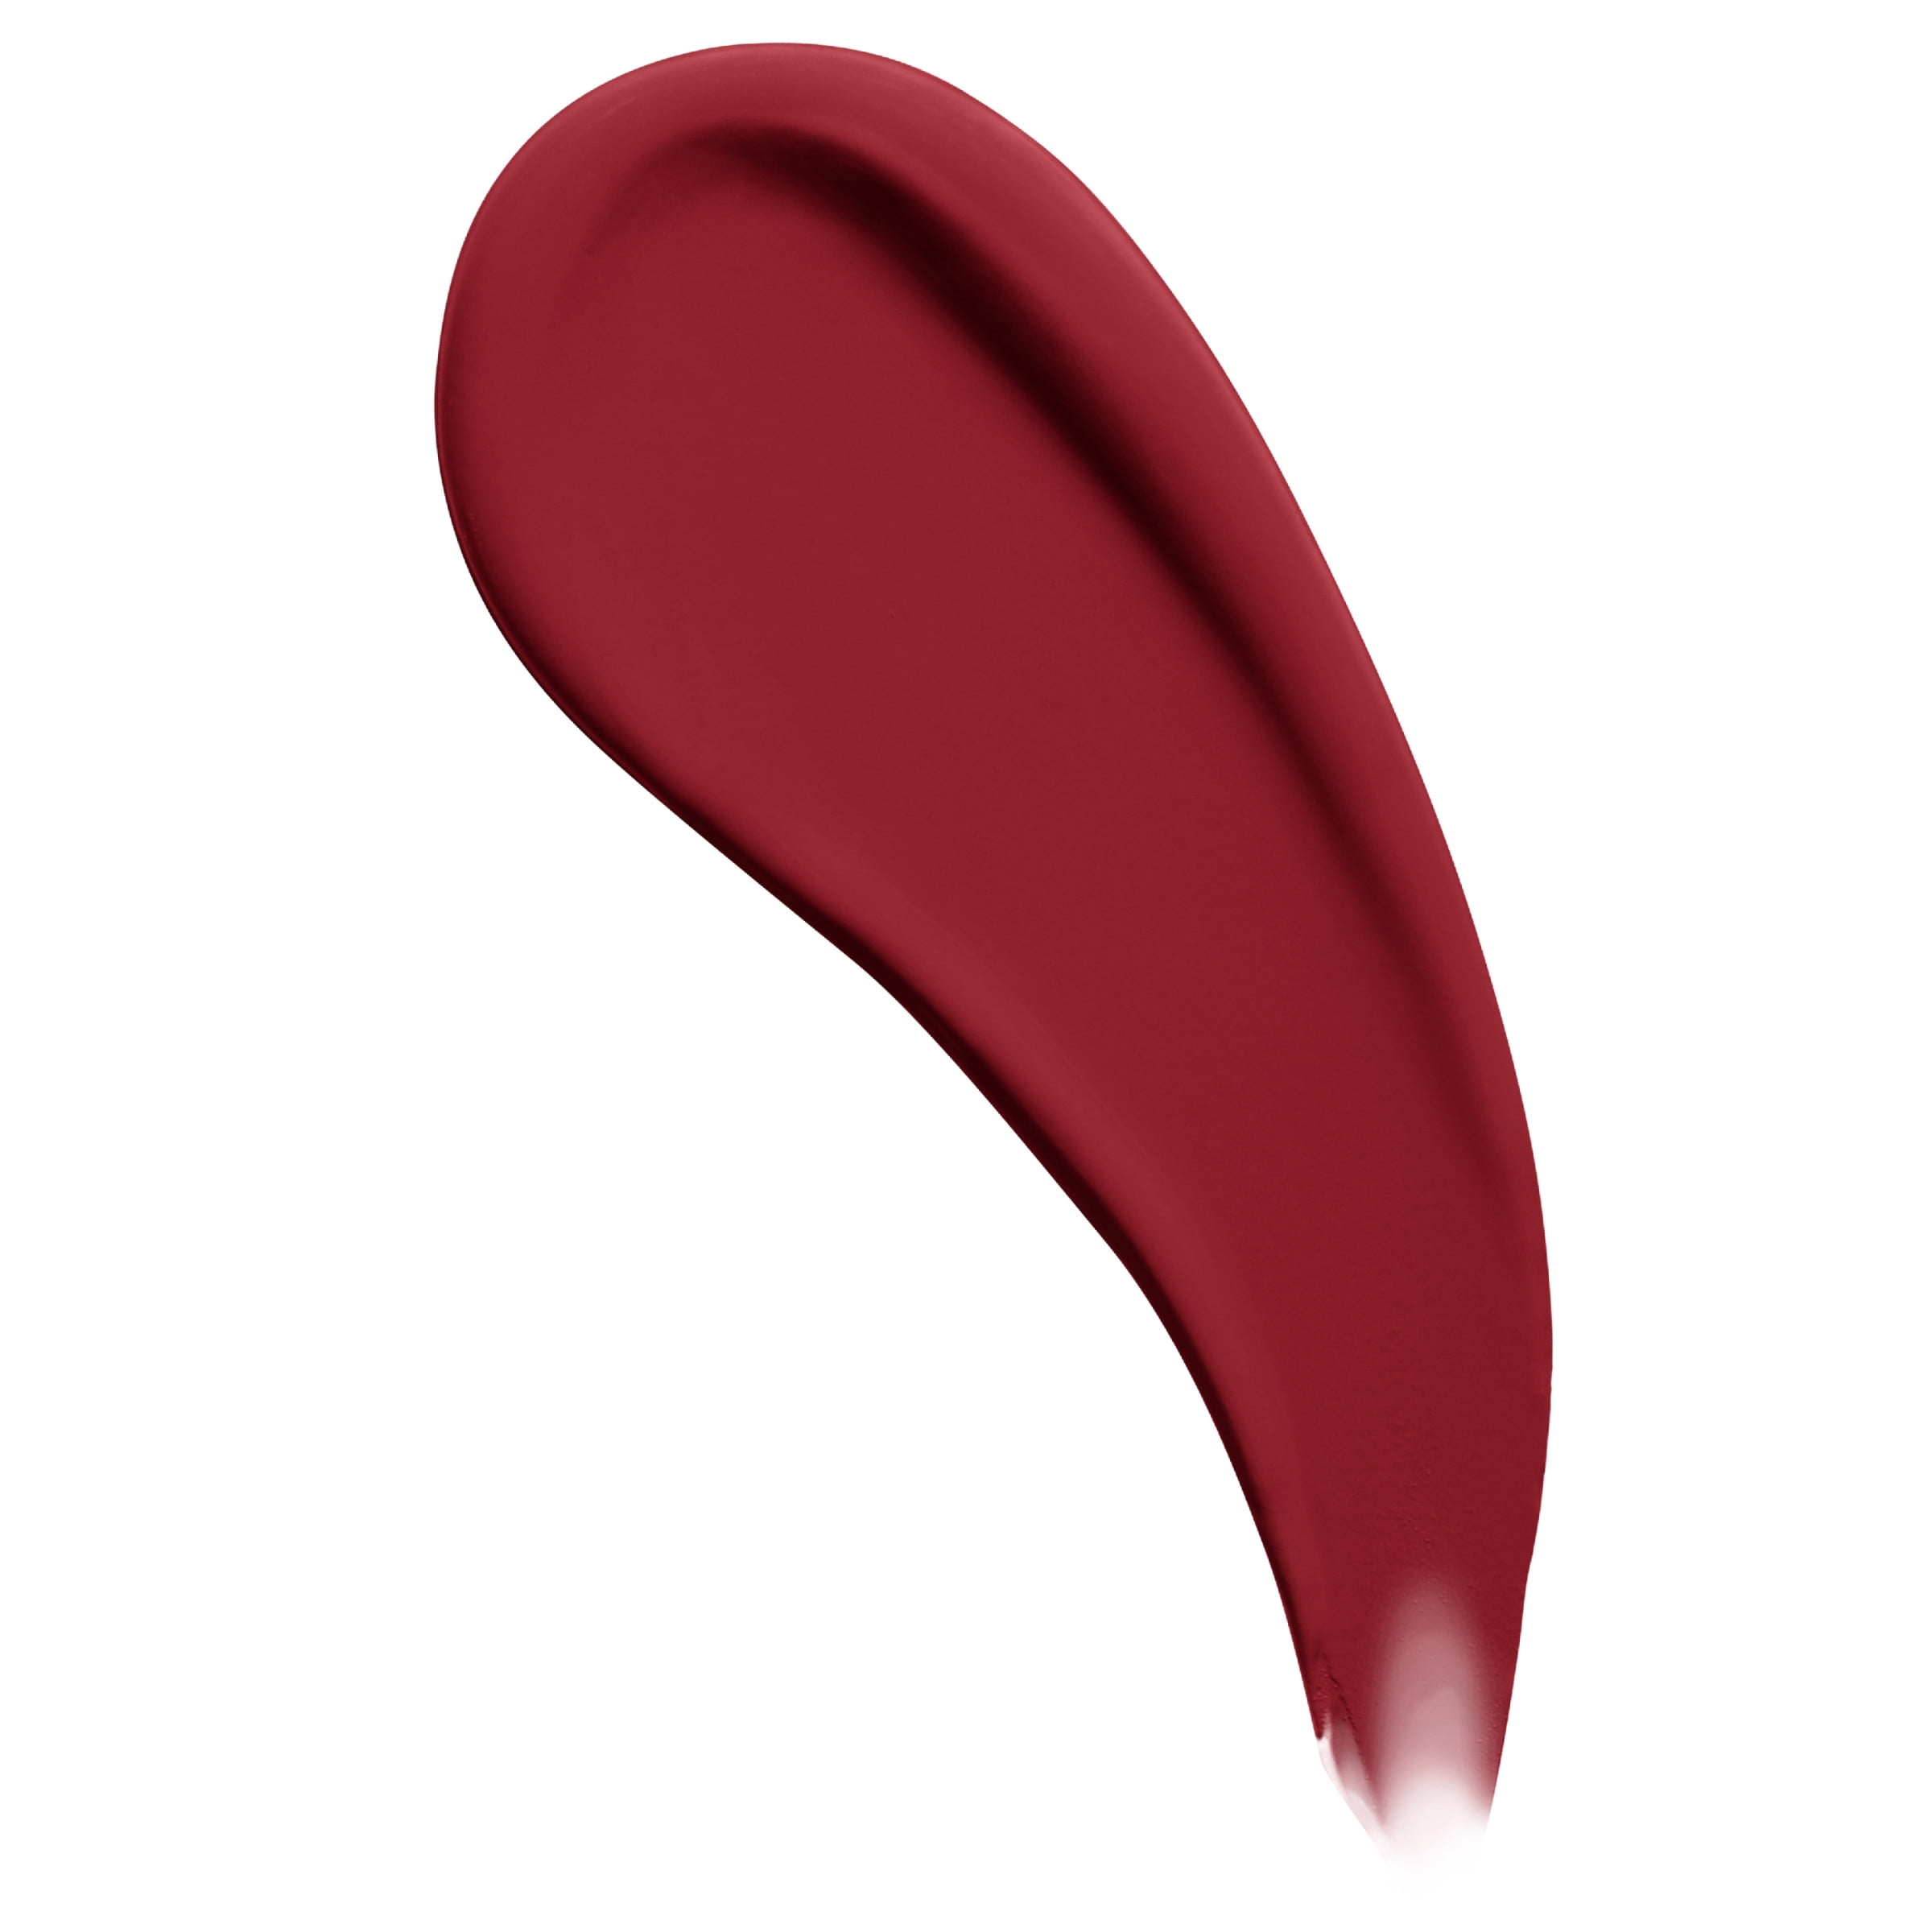 XXL fl. Liquid NYX 0.13 Professional Lipstick, Lingerie oz. Makeup Unlaced, Lip